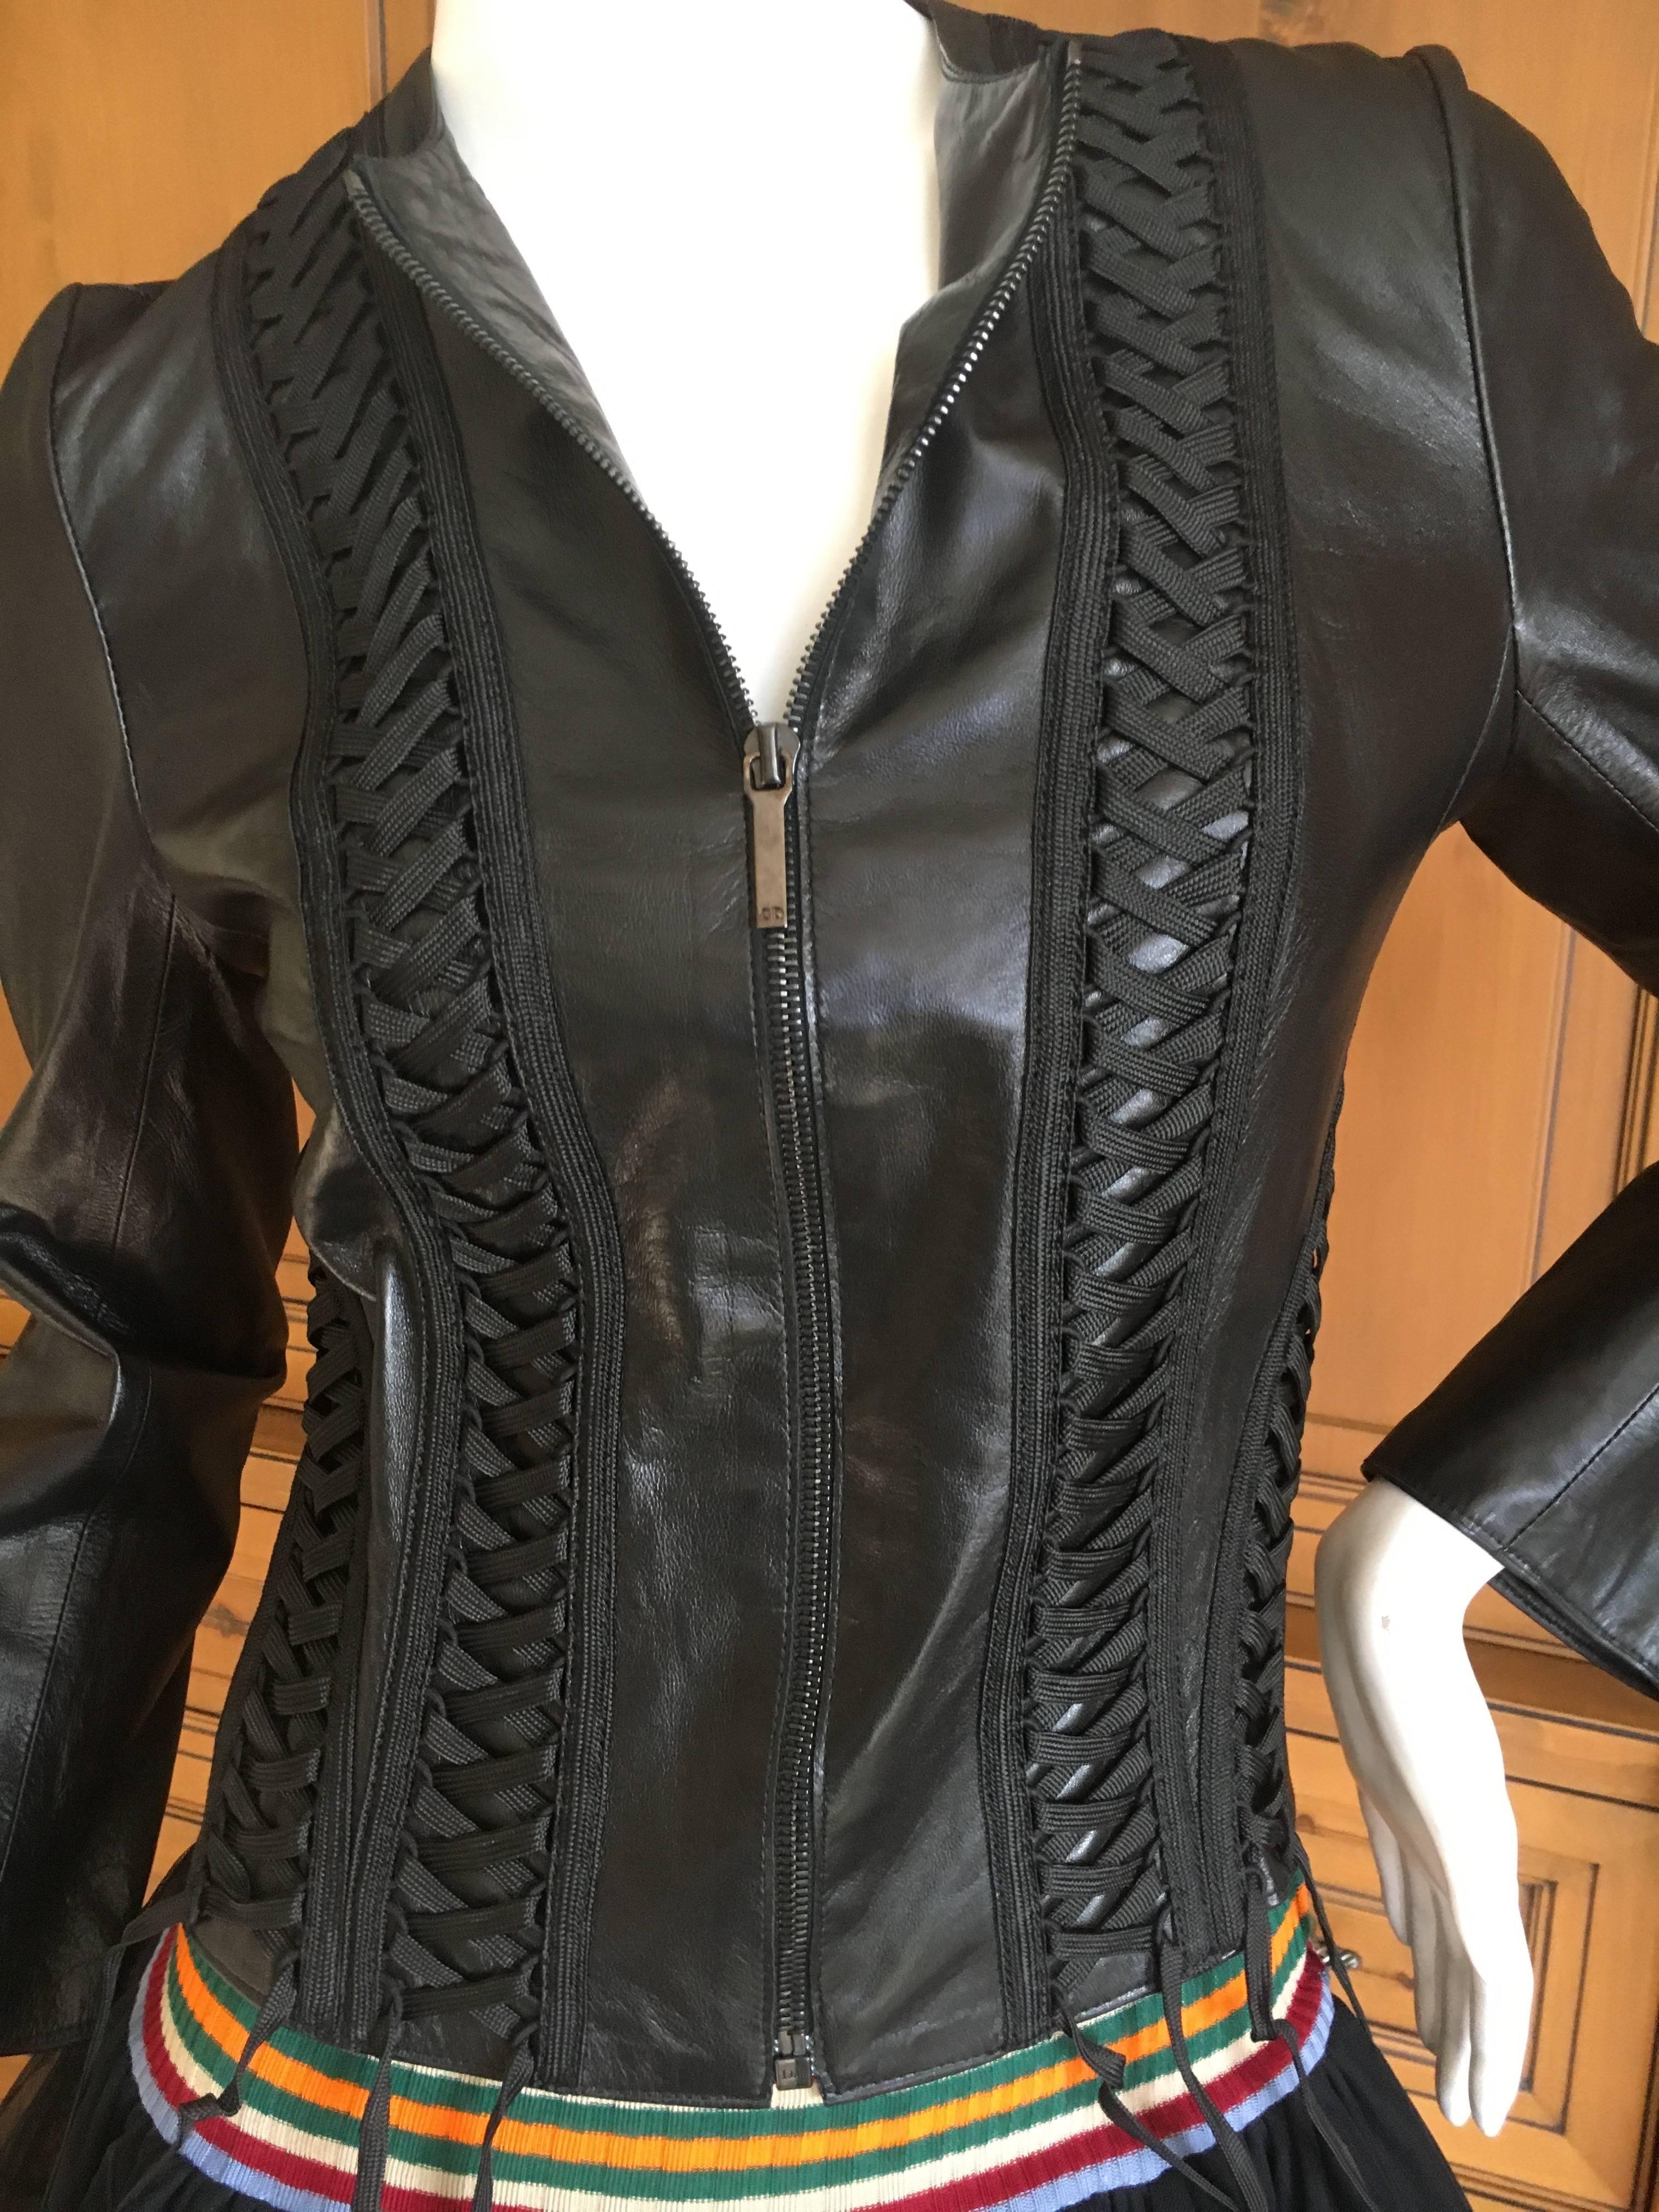 Christian Dior Black Lambskin Leather Corset Laced Bondage Jacket by Galliano 2